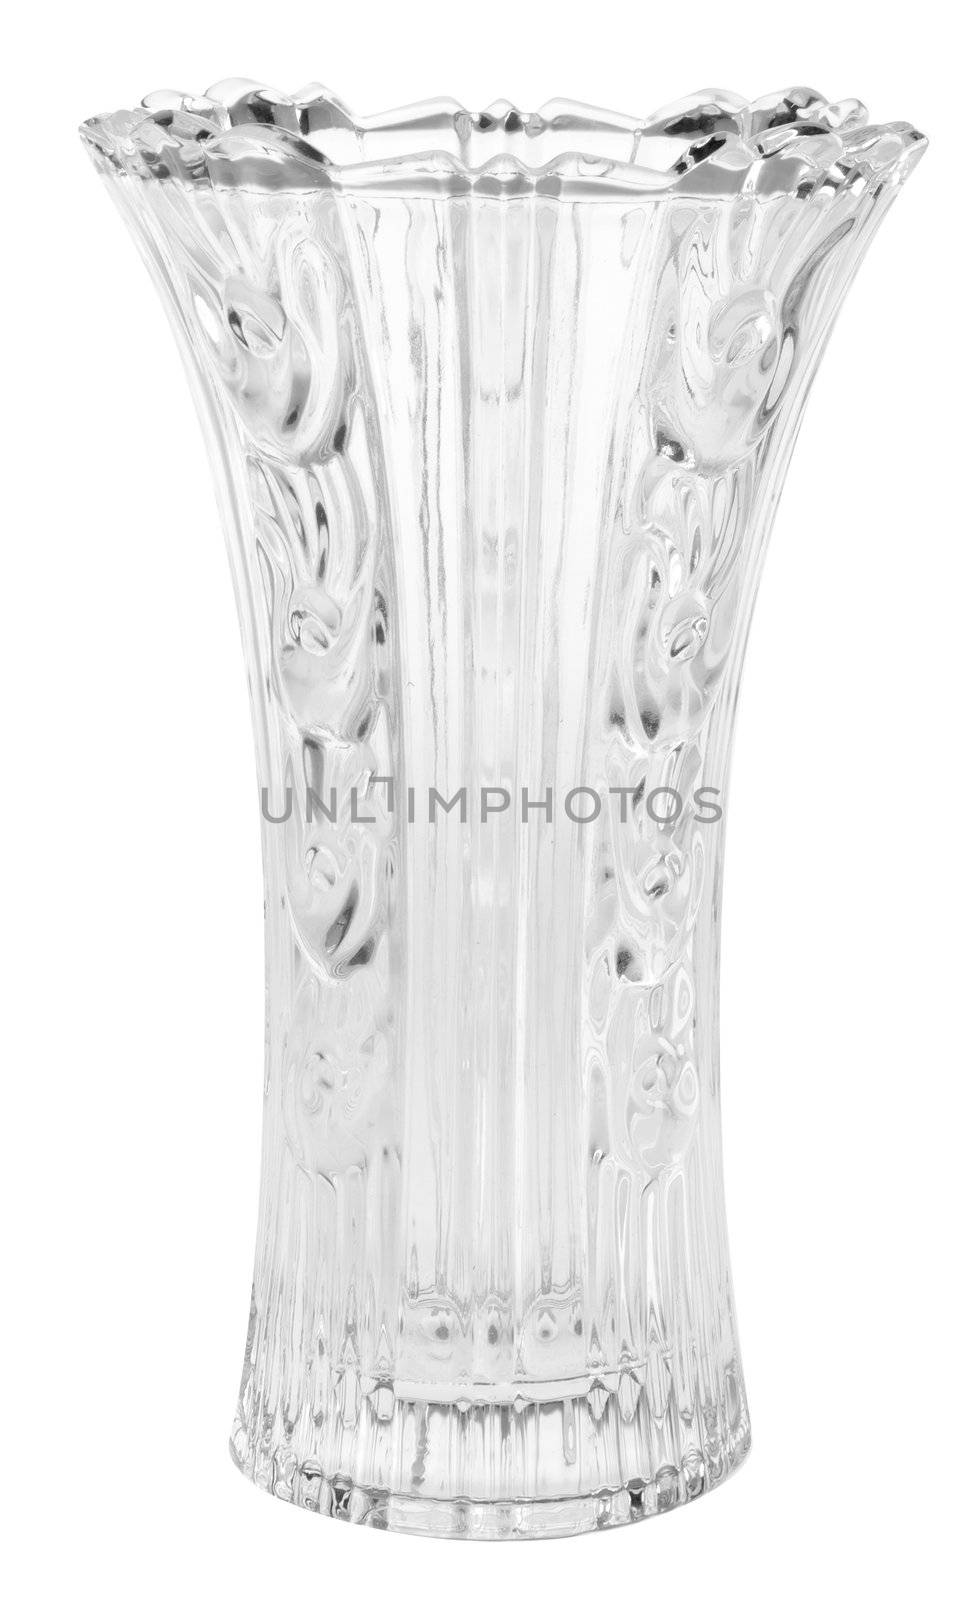 Glass vase on background by heinteh